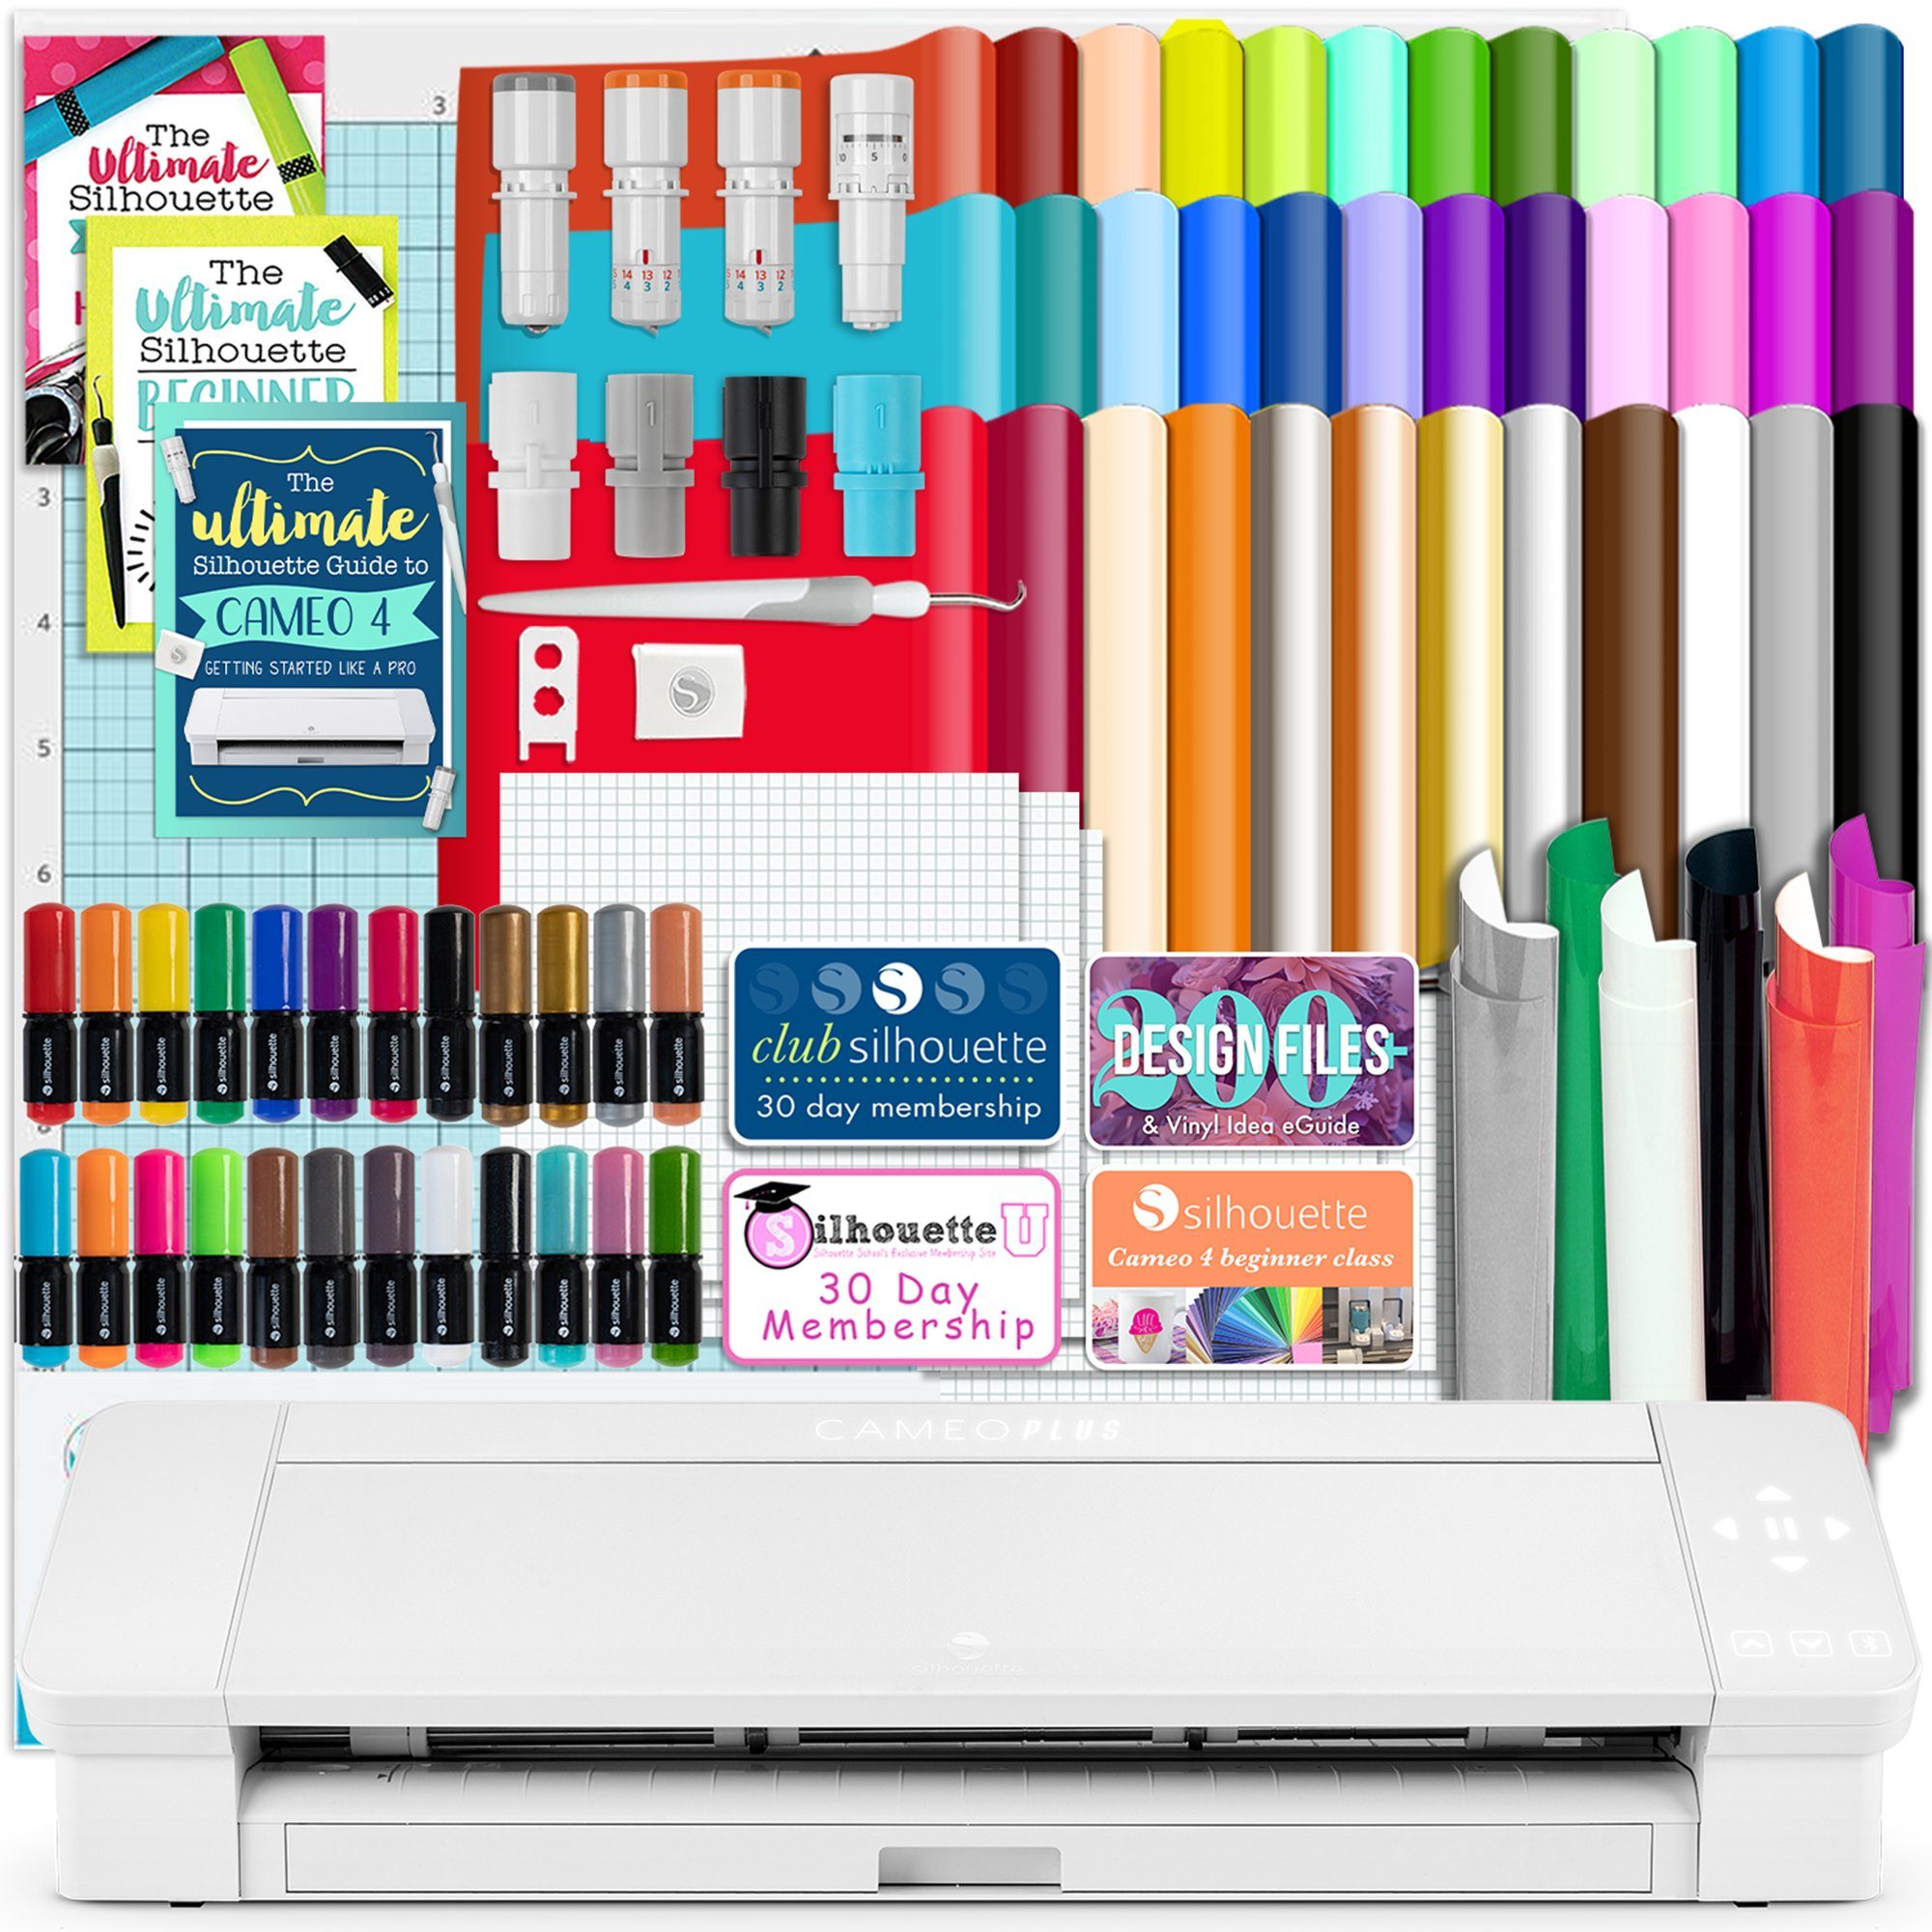 Silhouette Sketch Pen Starter Kit - 2XS The Ink